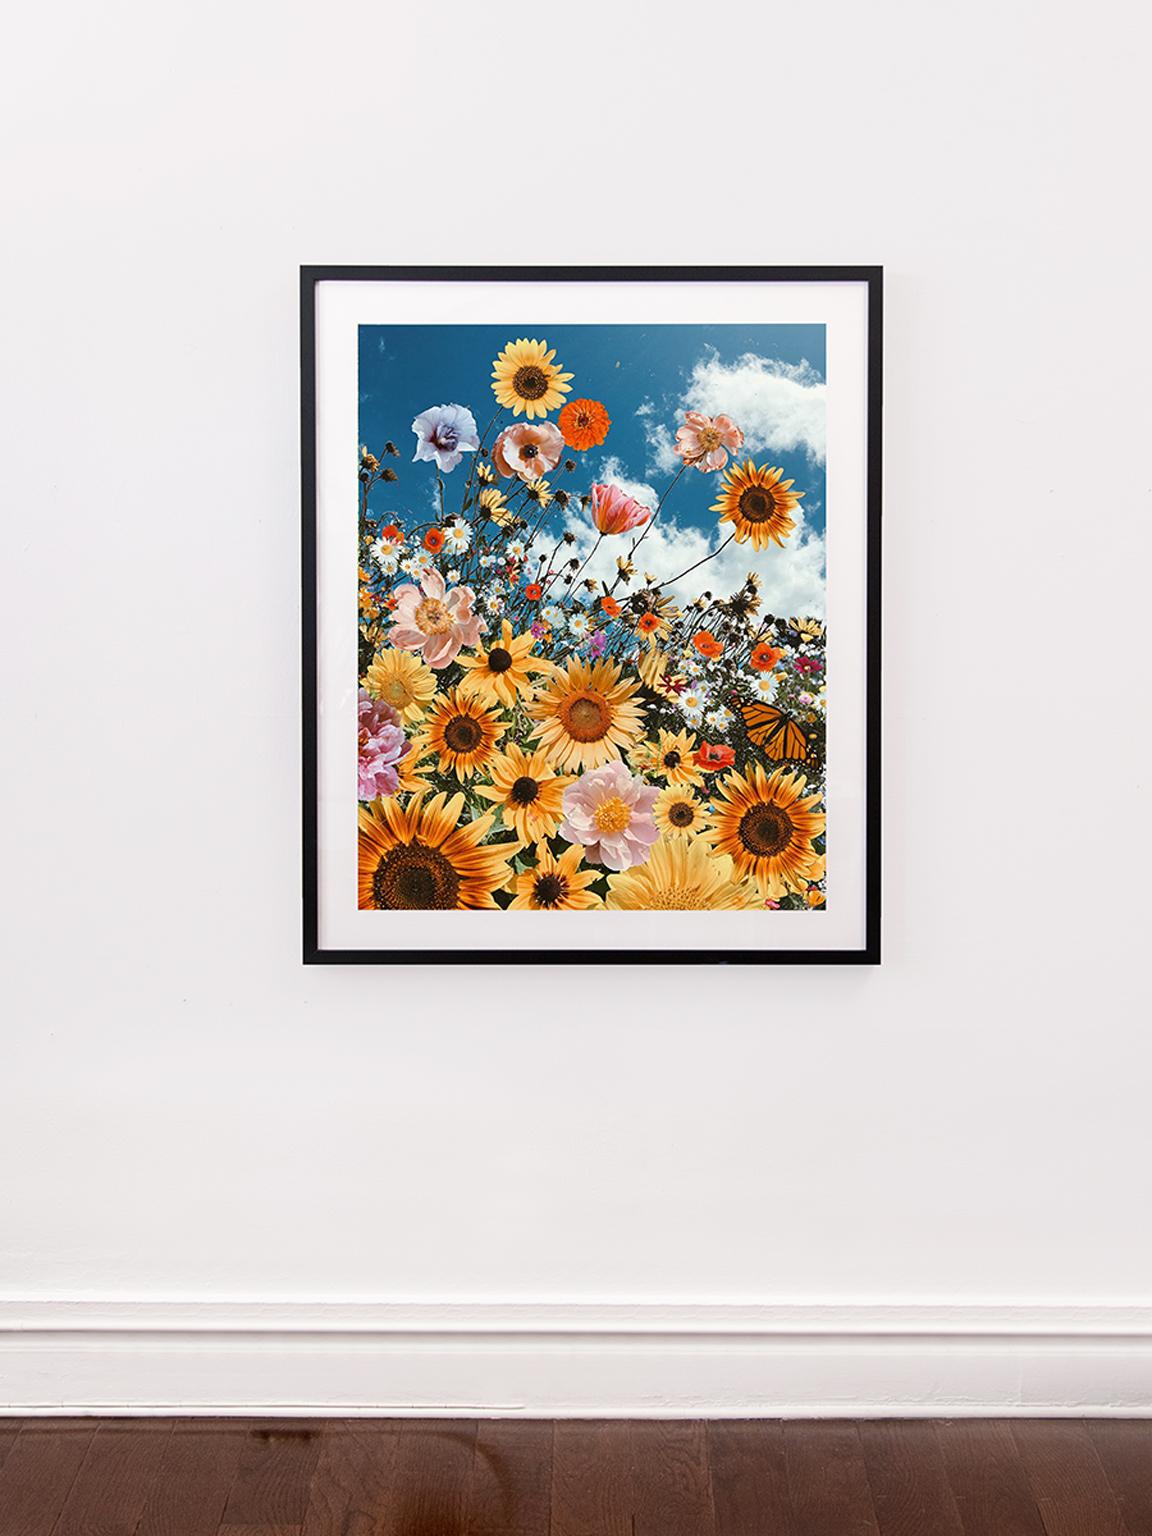 Sunflower Heaven - Print by Siobhan O'Dwyer